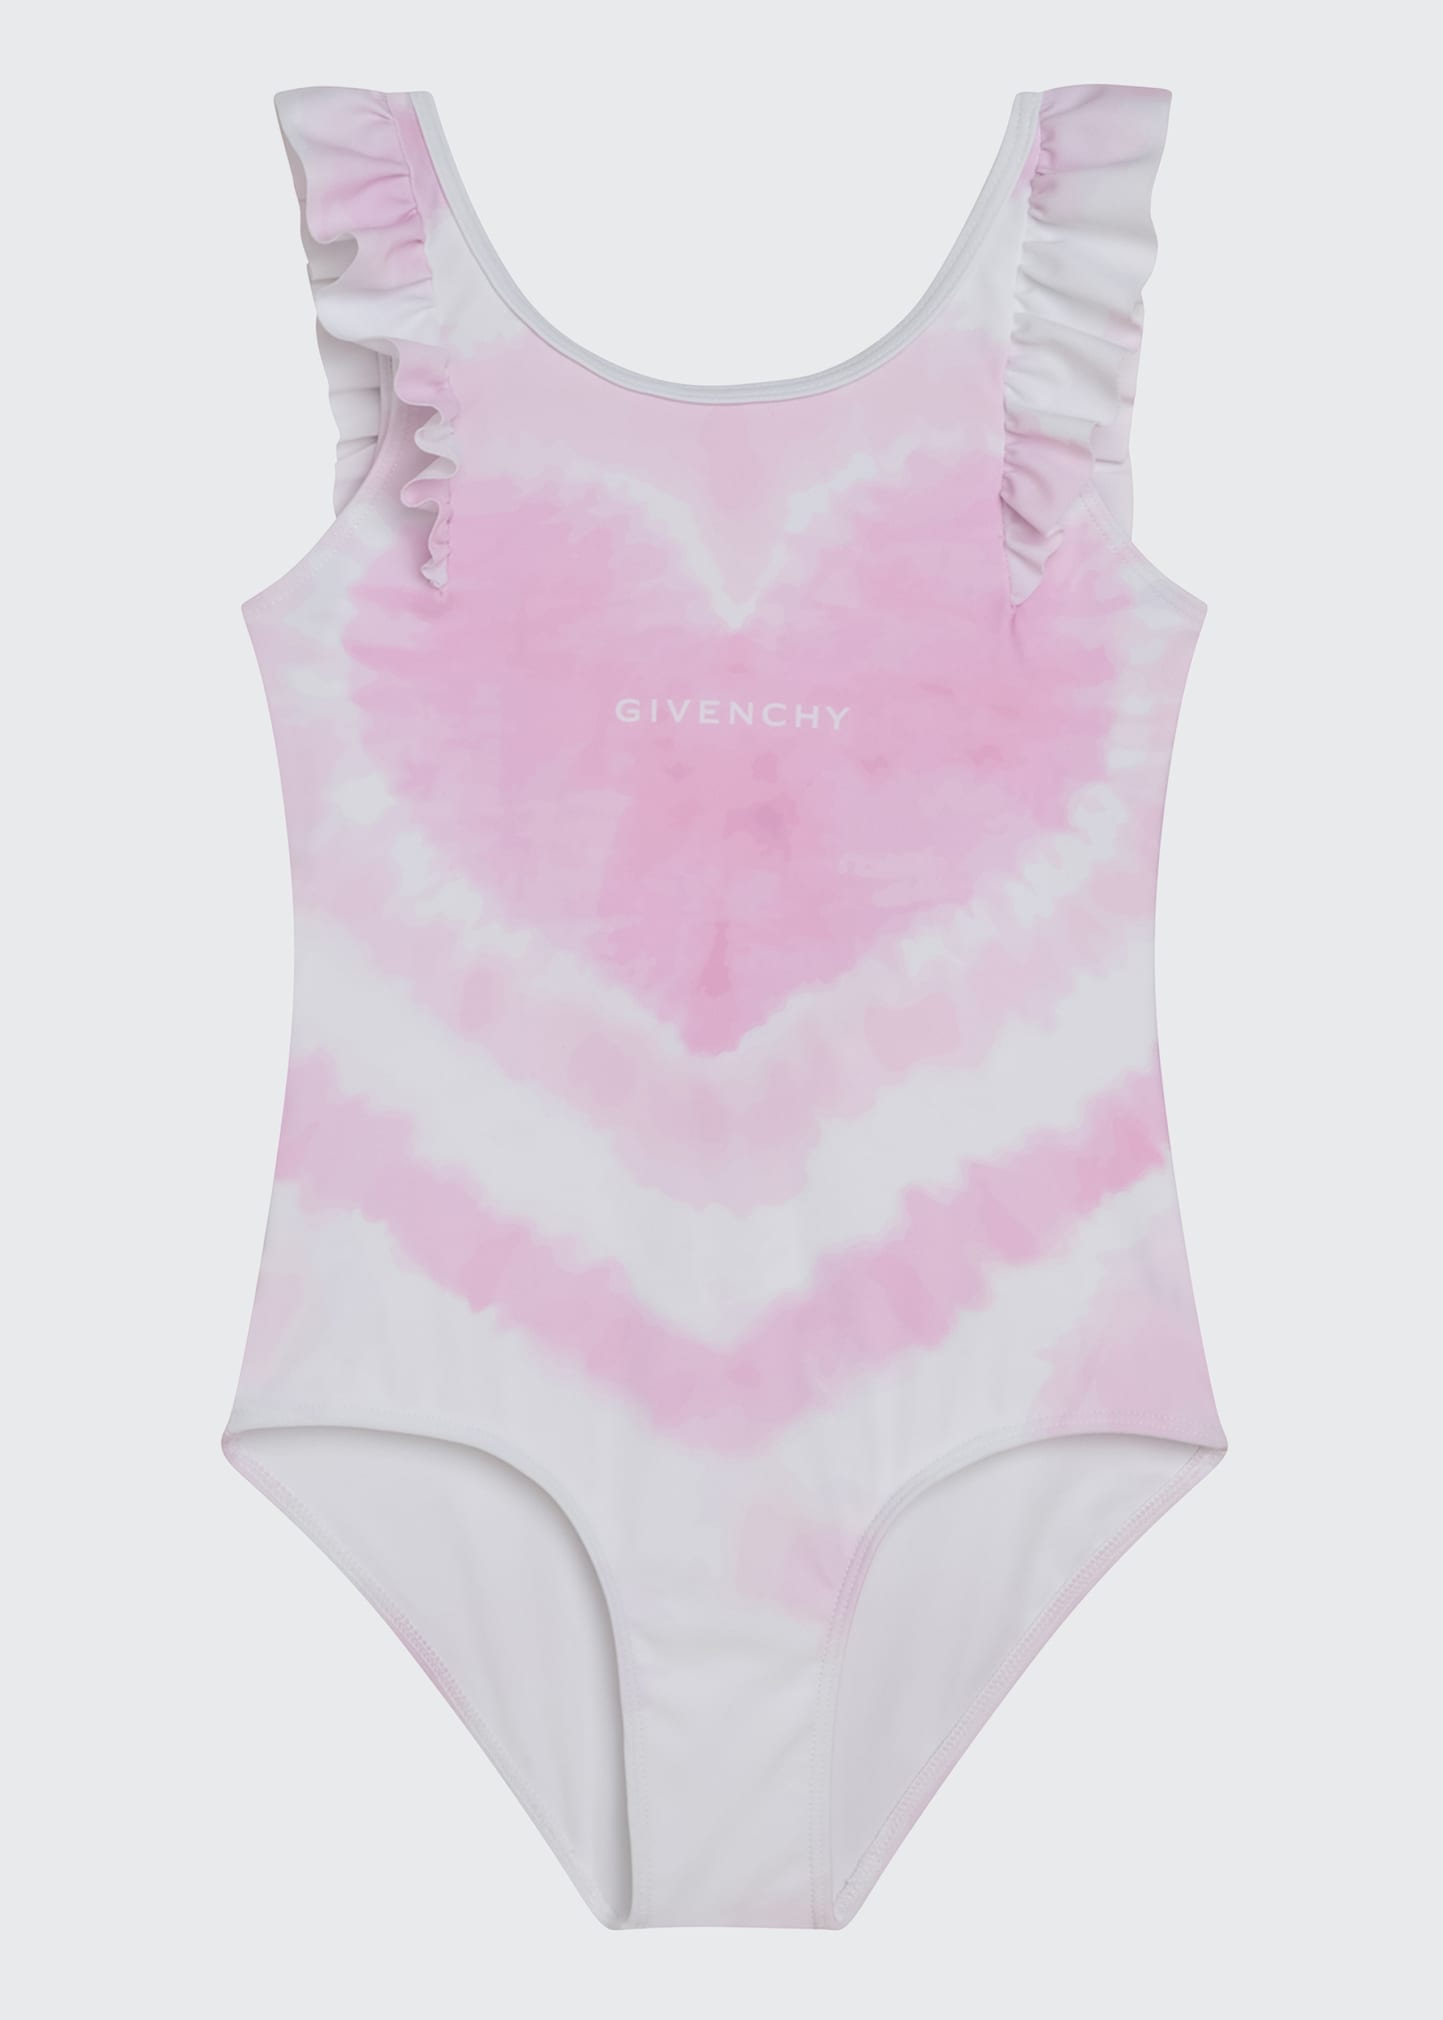 Girls Swim swimsuit 2 piece Tankini  Large XL Black Pink Palm trees Shells NEW